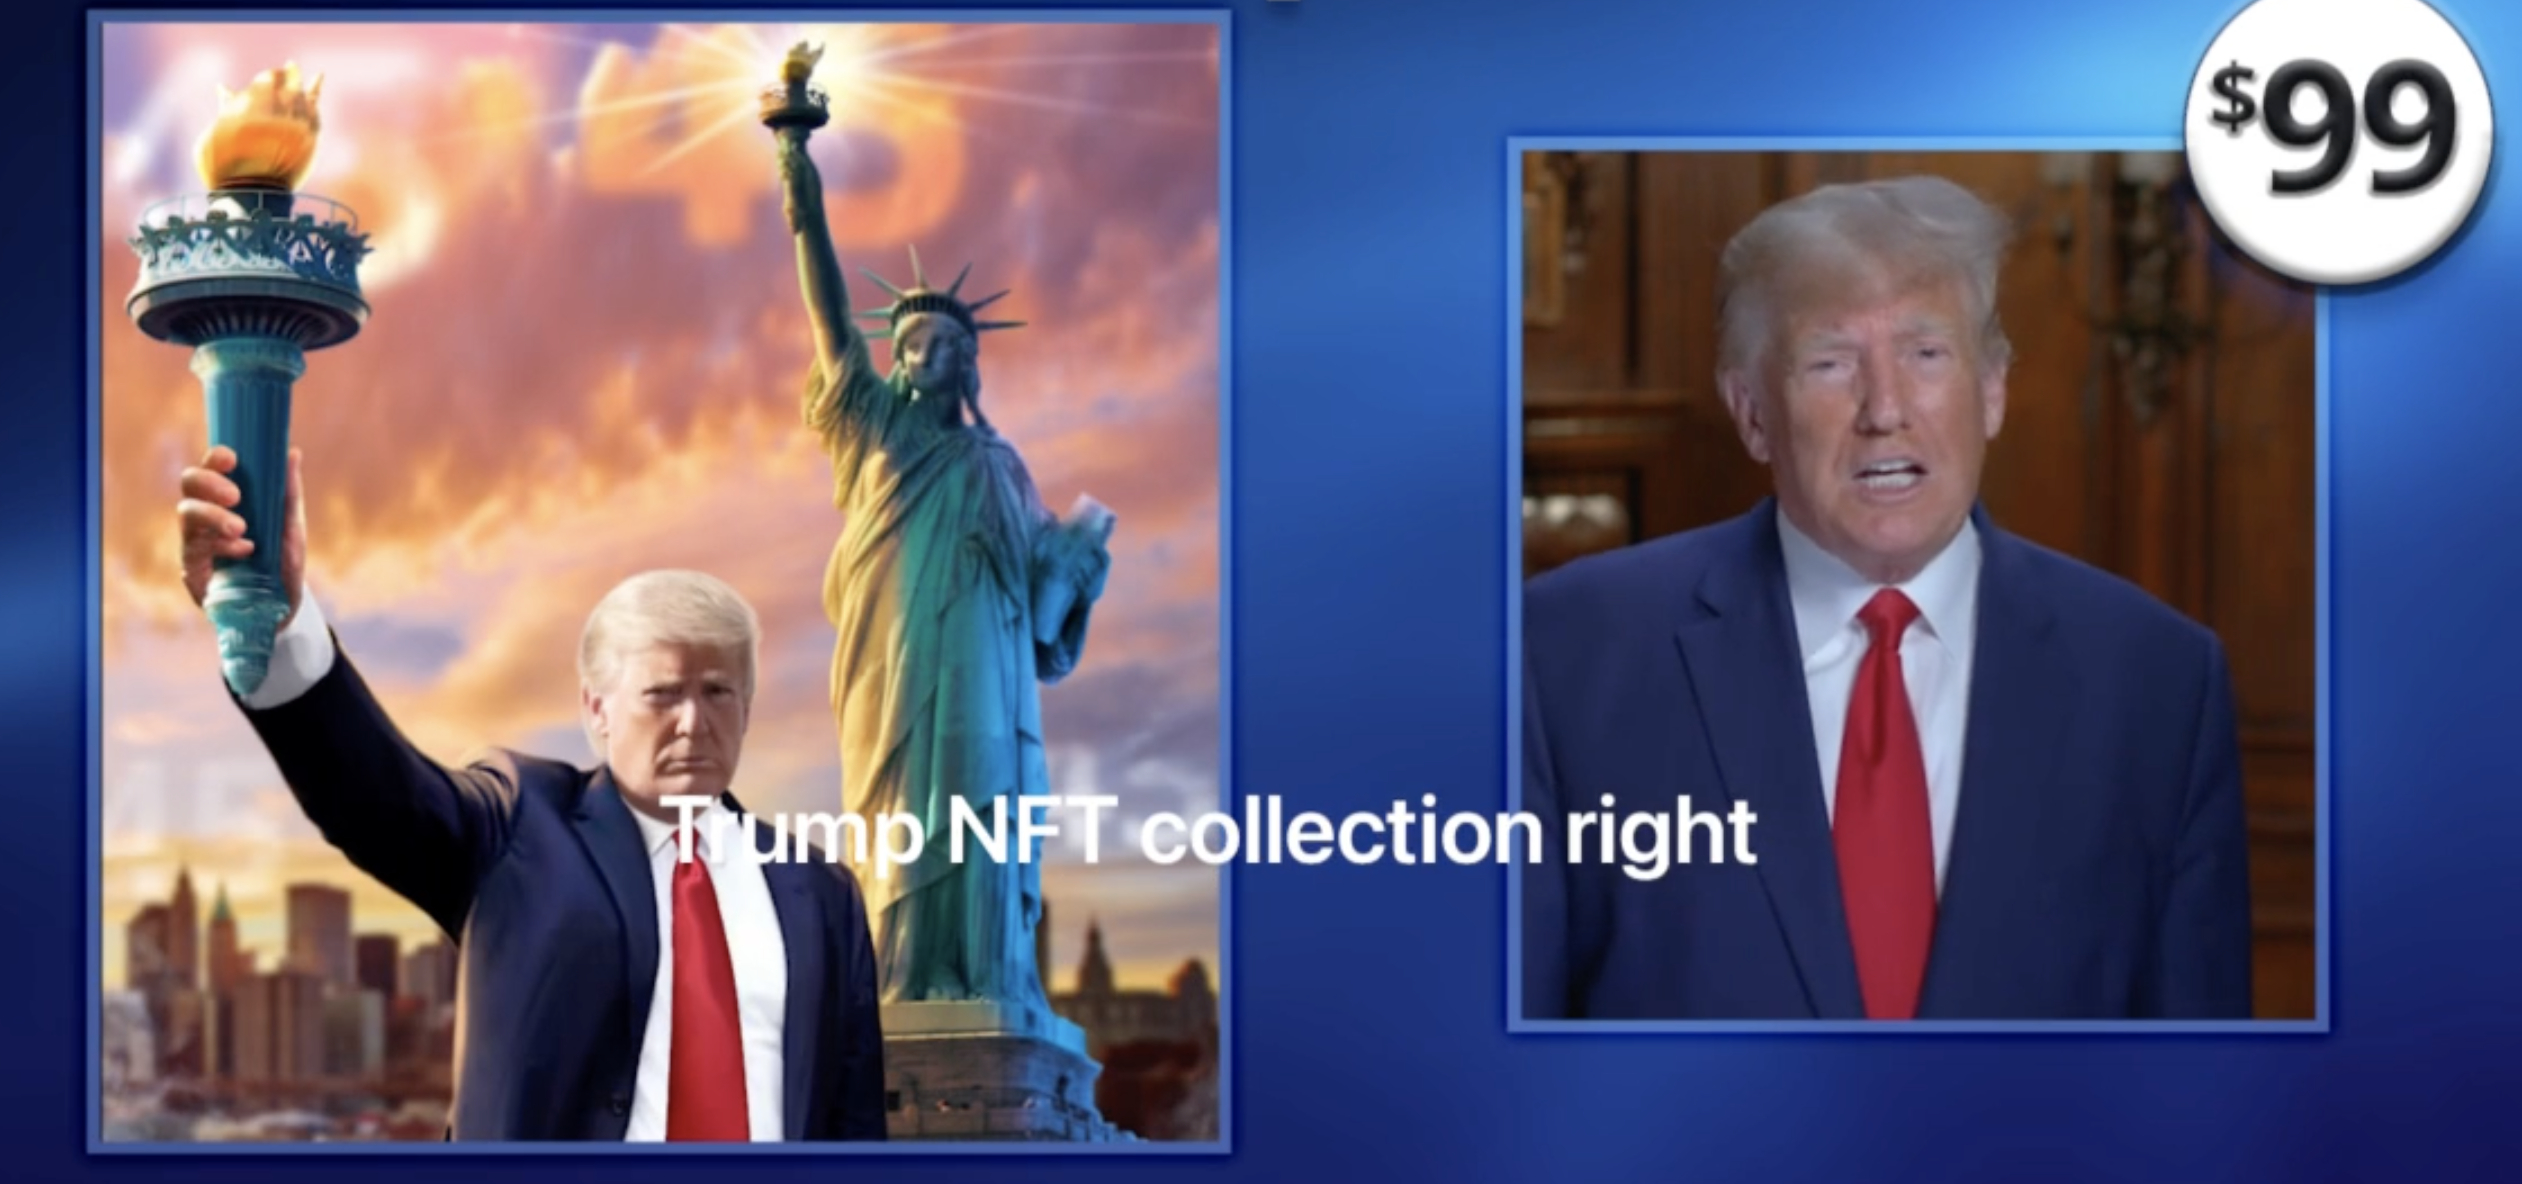 Milliardär und Ex-US-Präsident Donald Trump startet offizielles NFT-Projekt